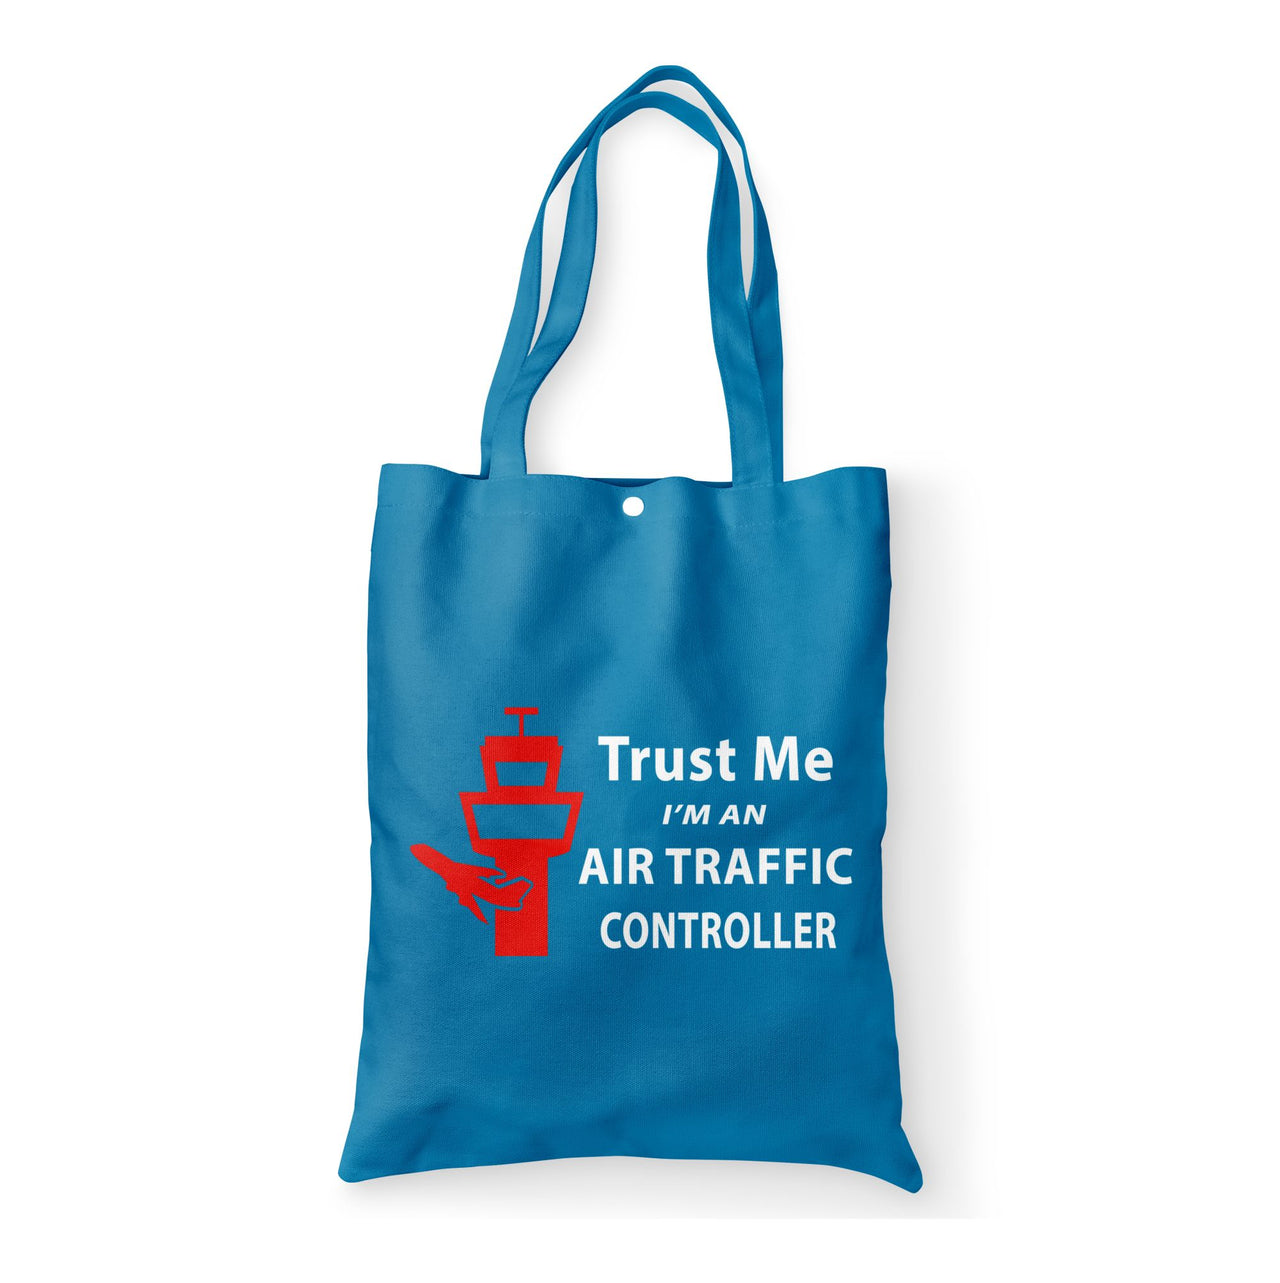 Trust Me I'm an Air Traffic Controller Designed Tote Bags